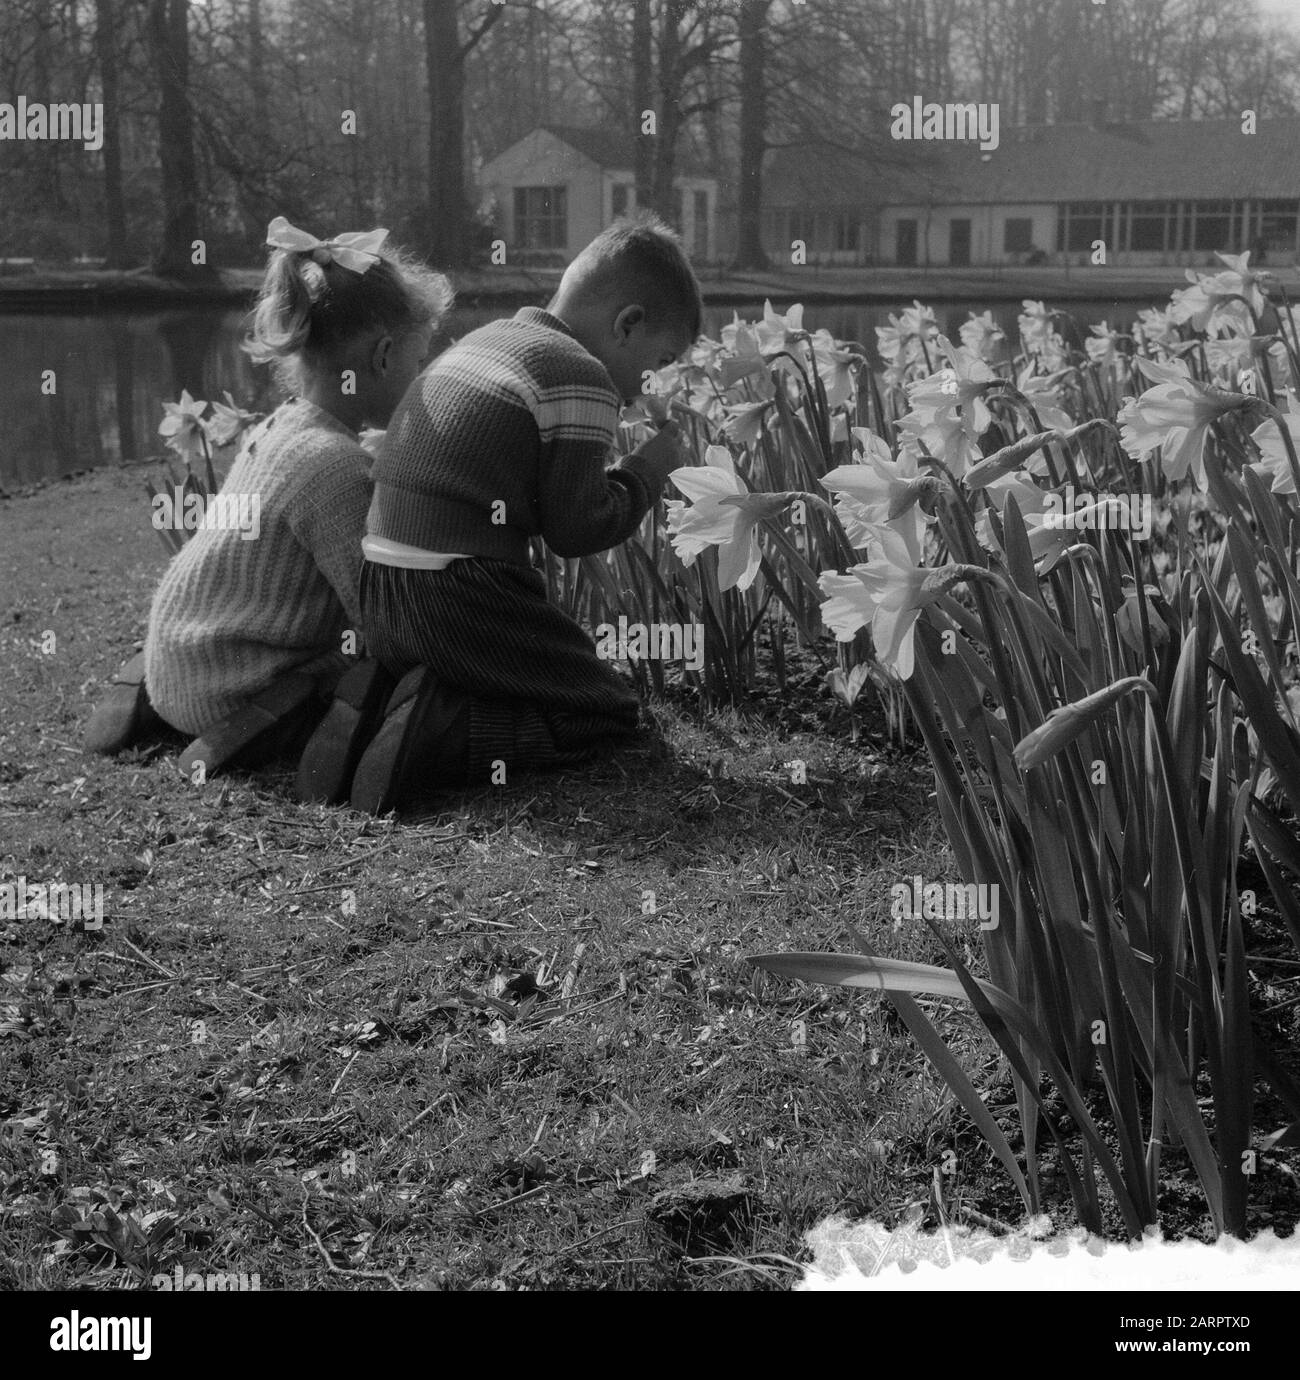 Children in daffodil fields in the Keukenhof in Lisse Date: March 12, 1957 Location: Lisse Keywords: flowers, children, parks Institution name: Keukenhof Stock Photo